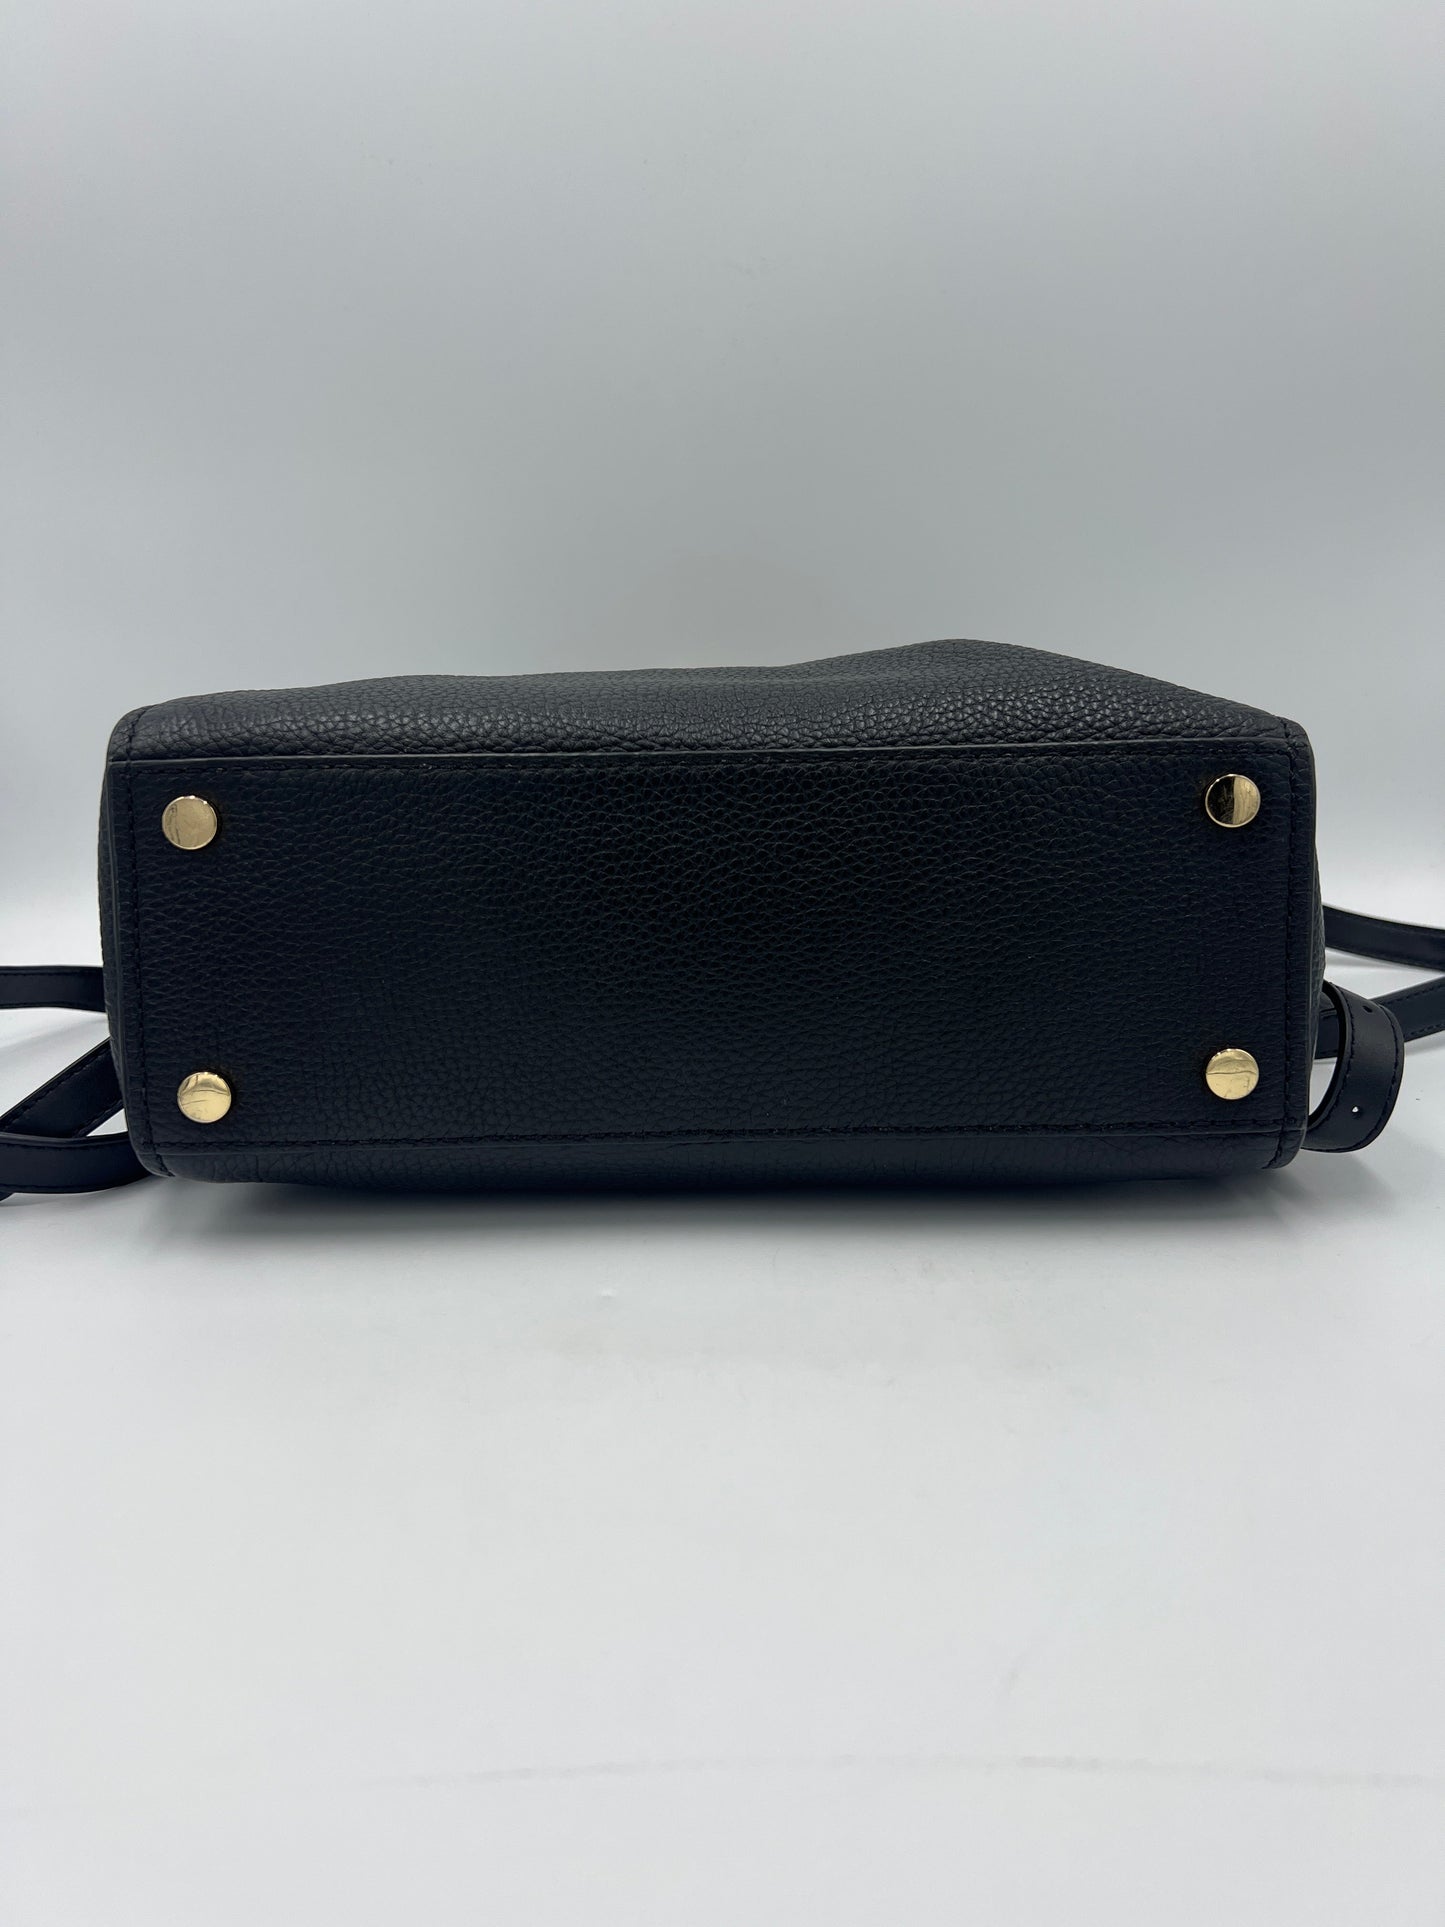 Like New! Leather Backpack Designer By Michael Kors  Size: Medium